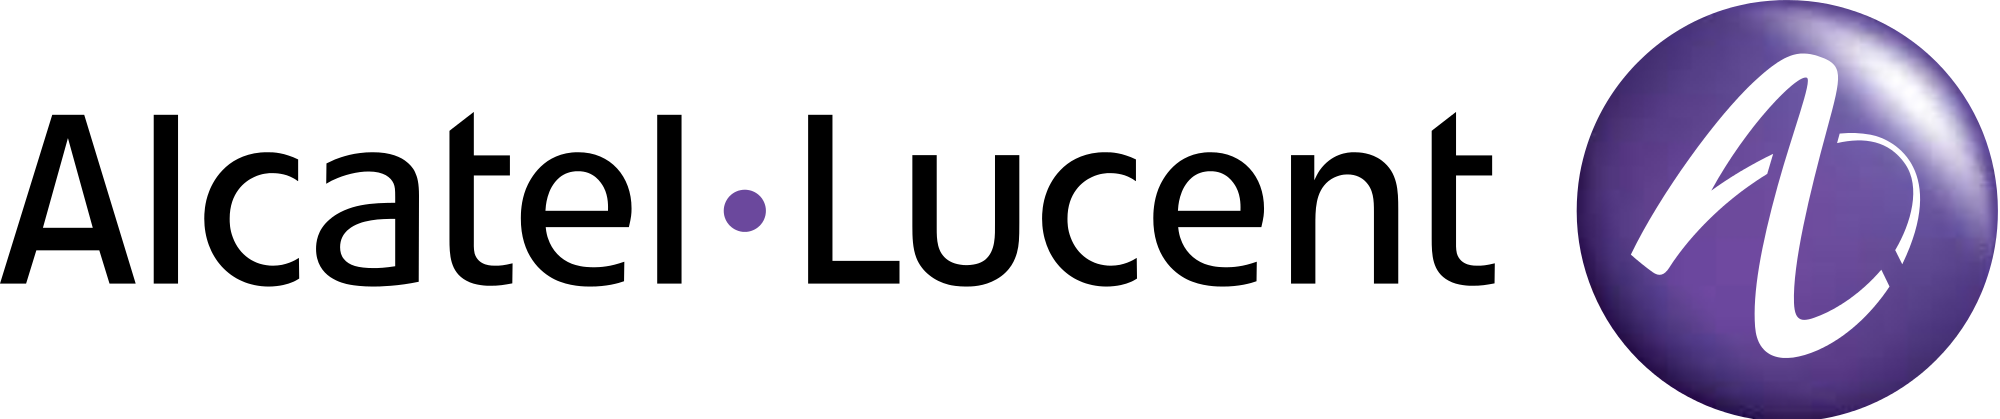 Alcatel Onetouch; Logo of Alc